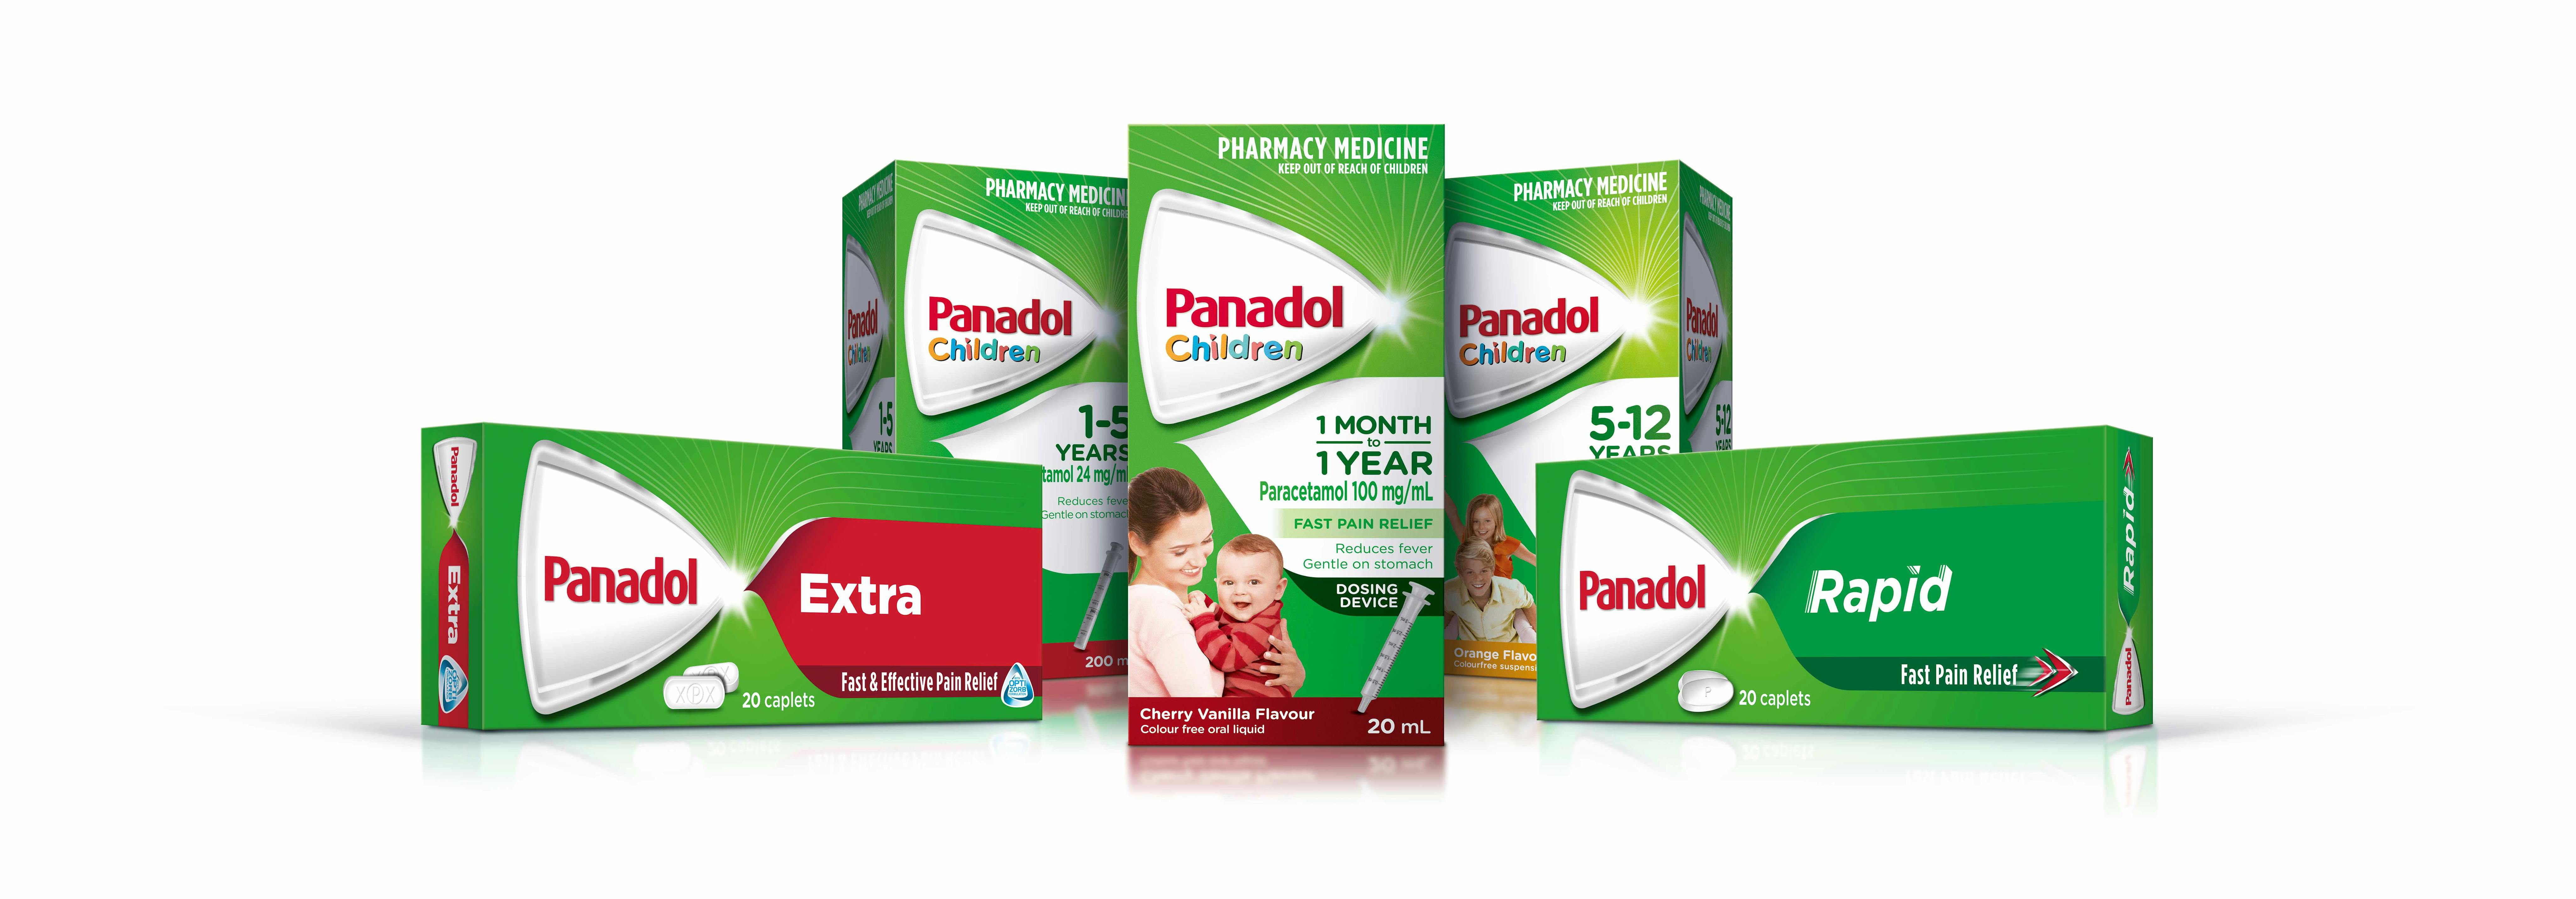 Panadol products range